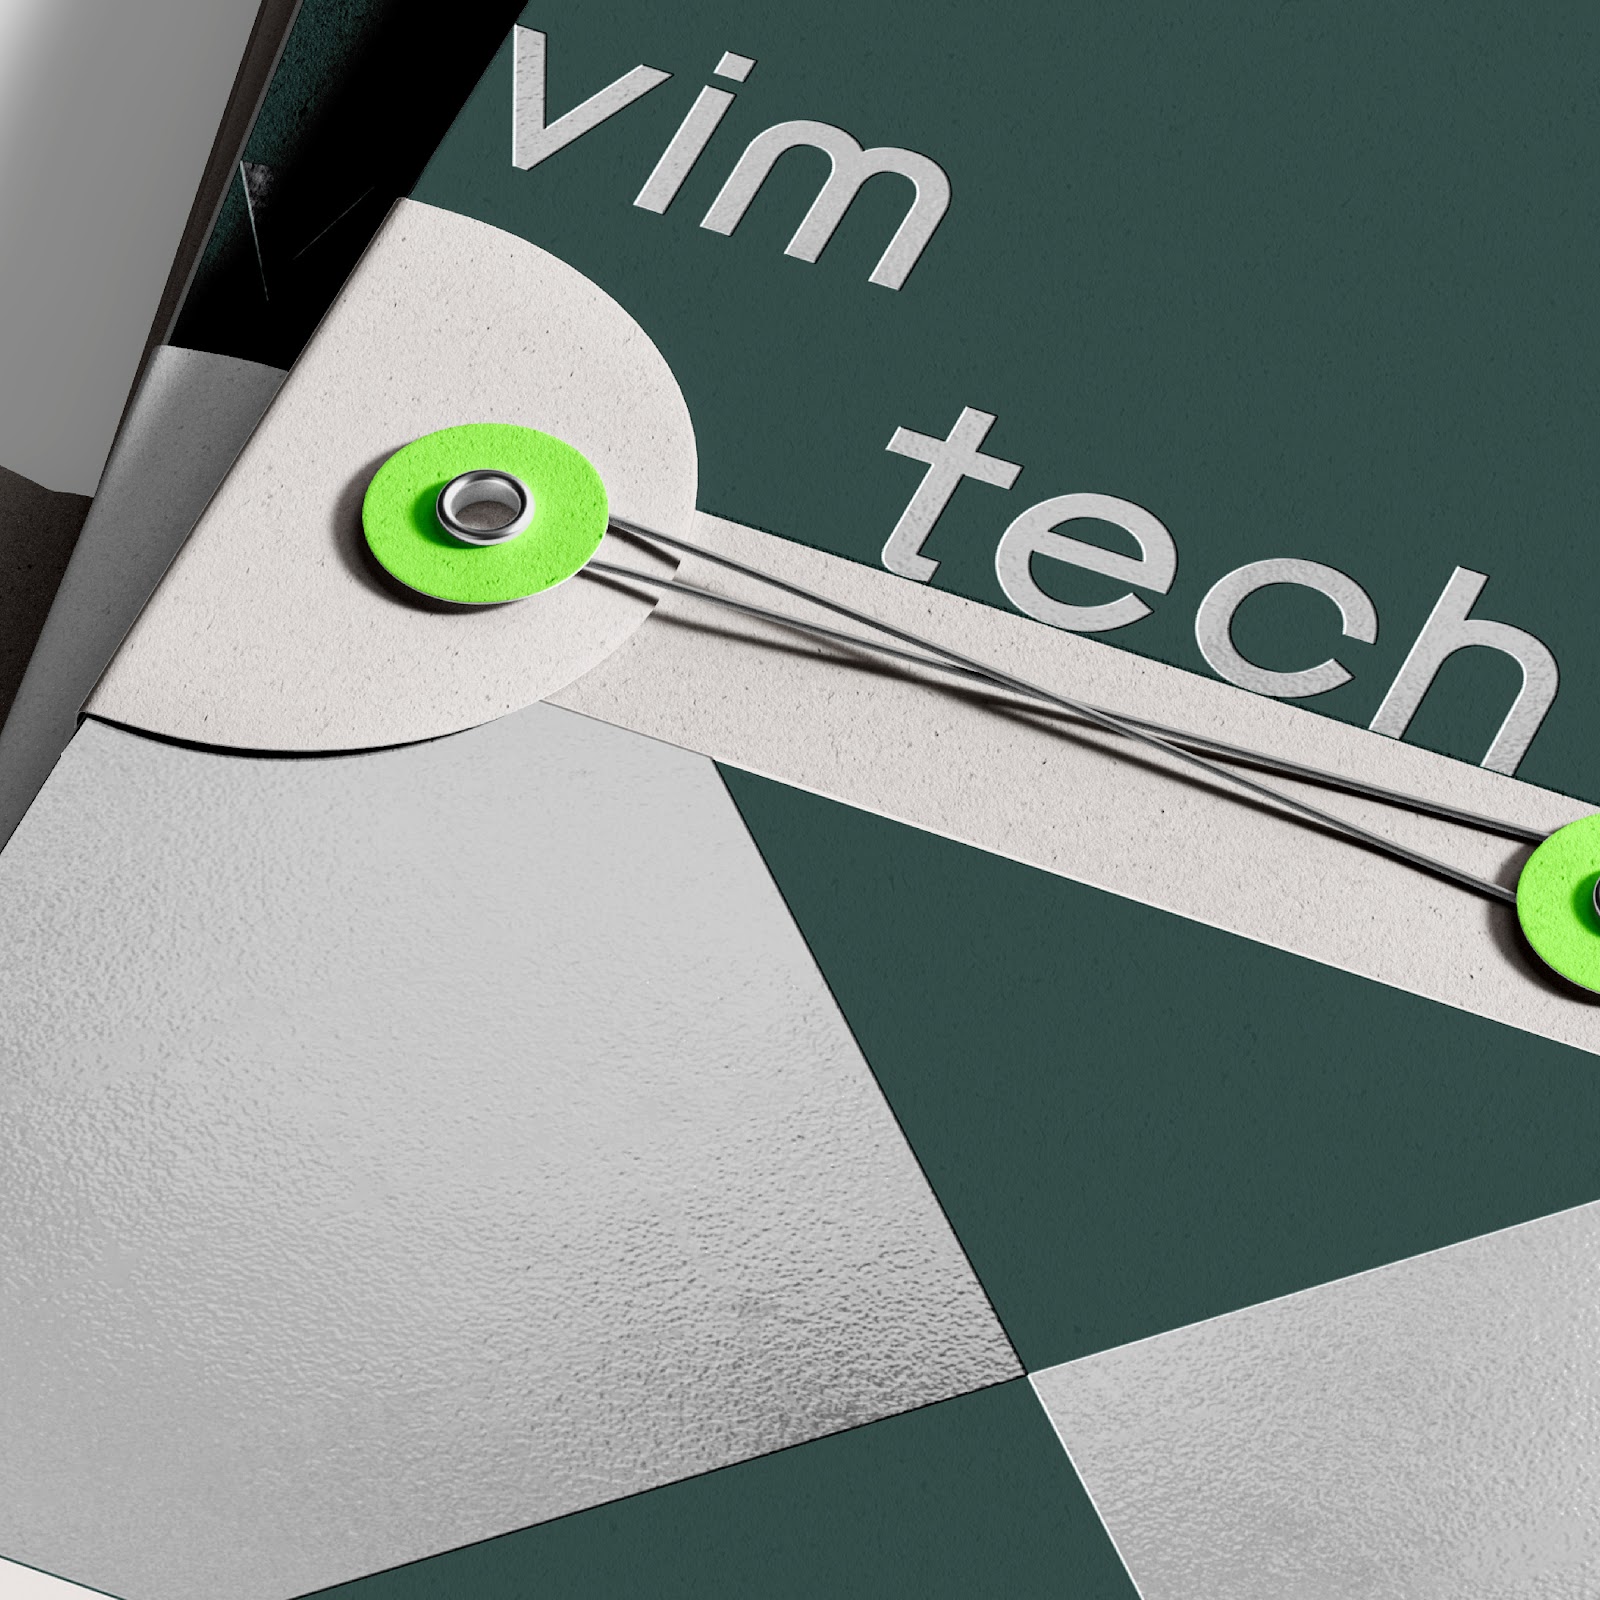 Vim Tech品牌视觉形象设计